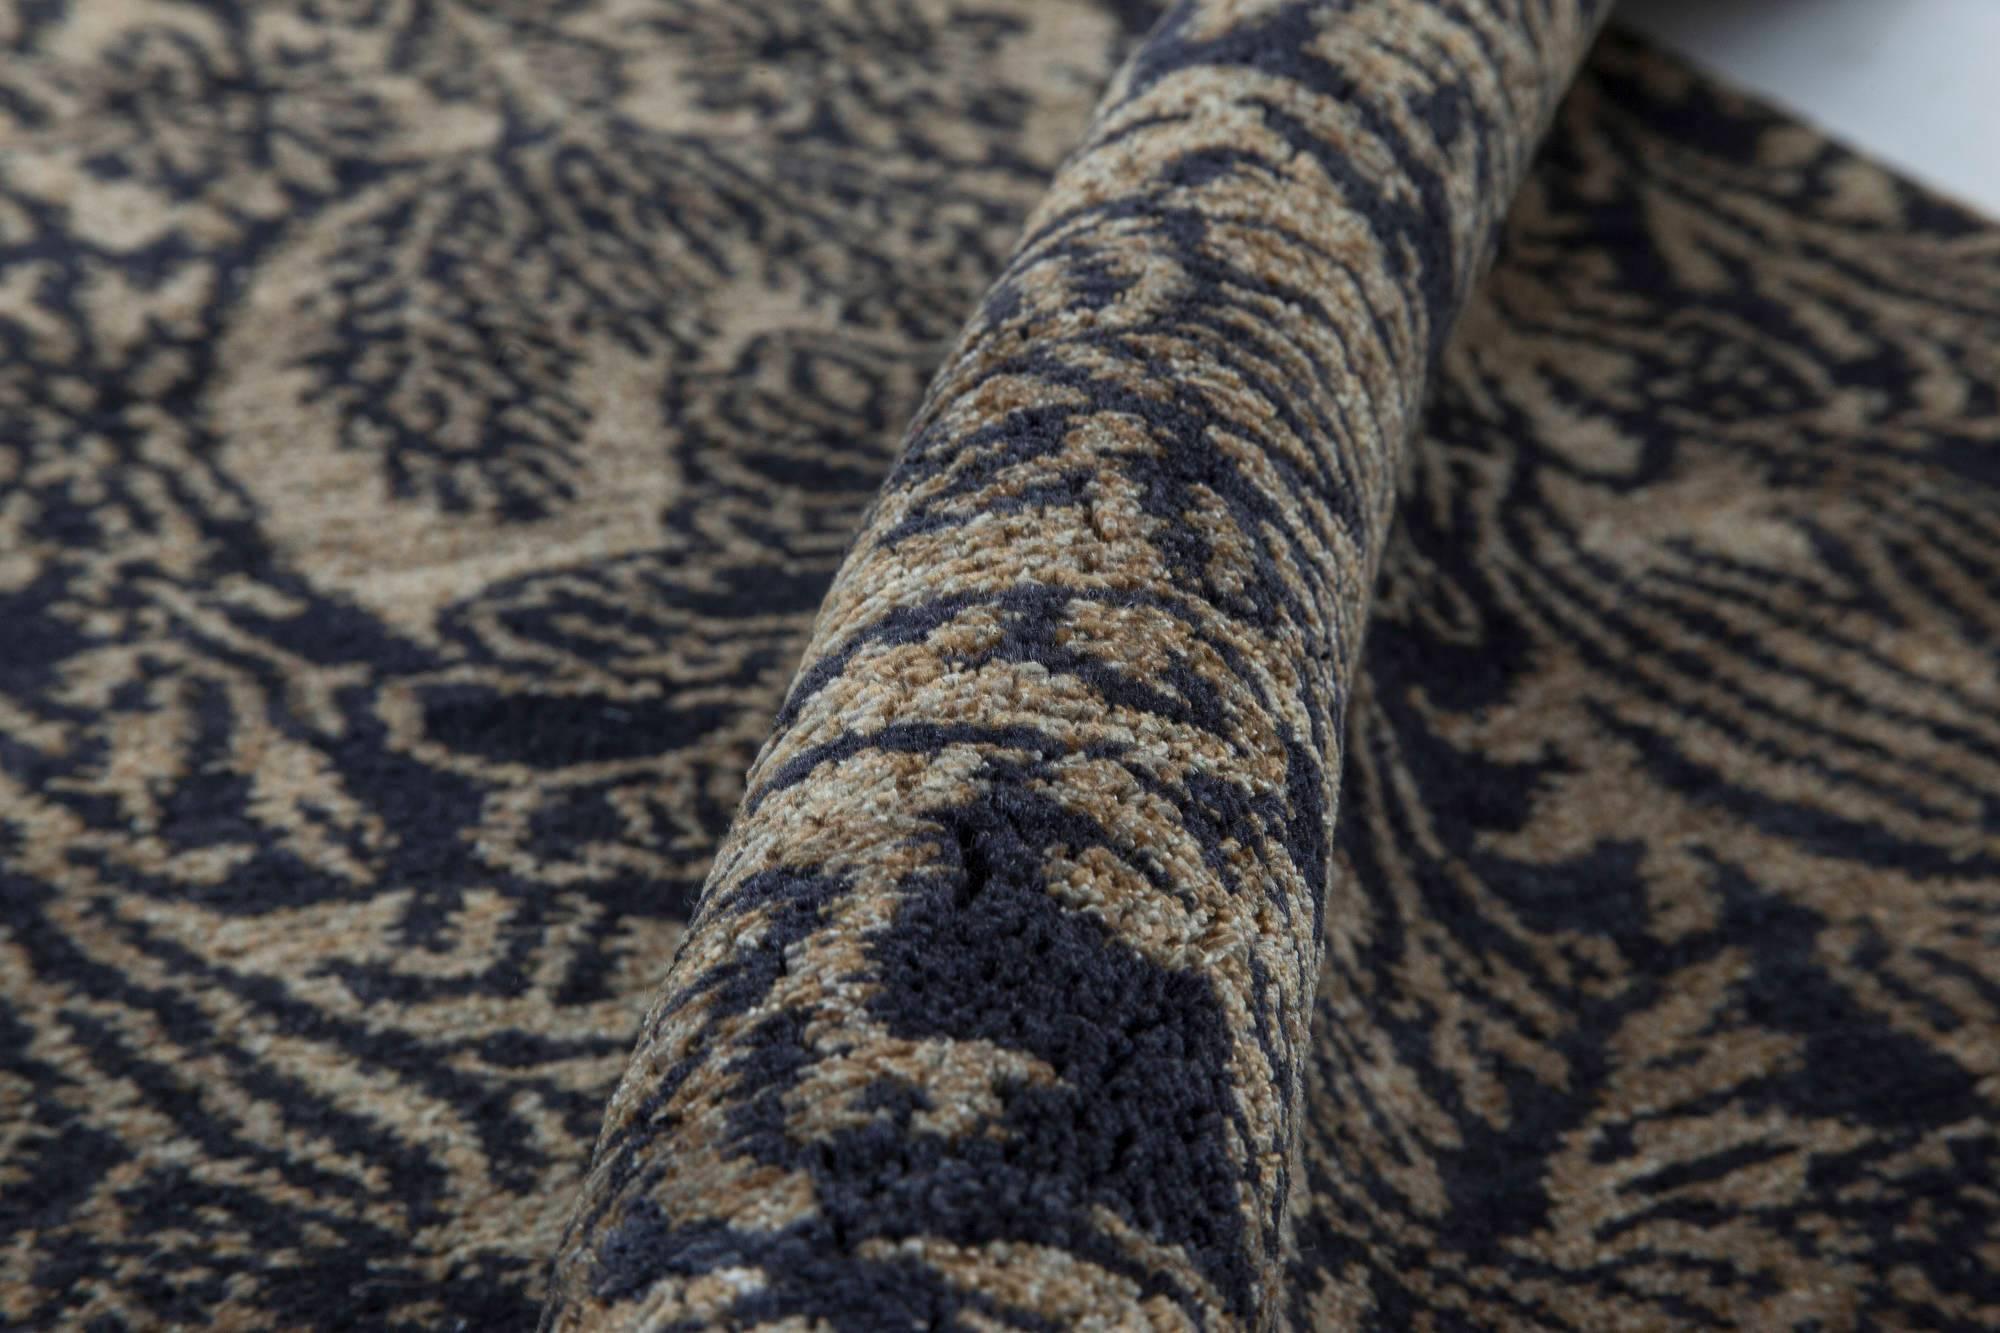 Contemporary European inspired Tibetan handmade rug by Doris Leslie Blau.
Size: 5.0